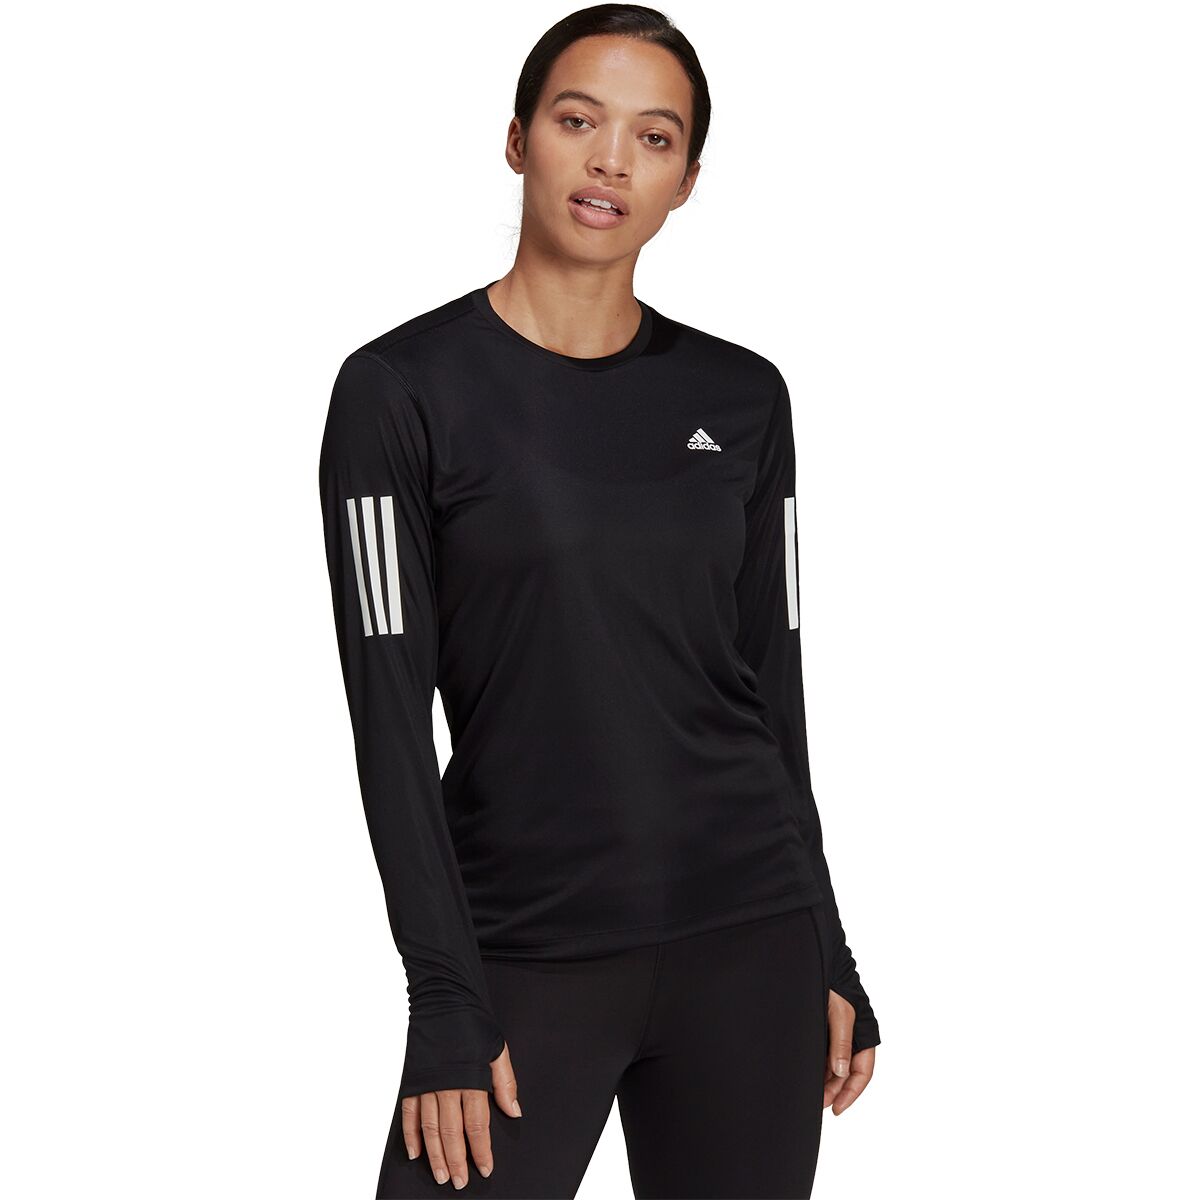 Adidas Own The Run Long-Sleeve T-Shirt - Women's